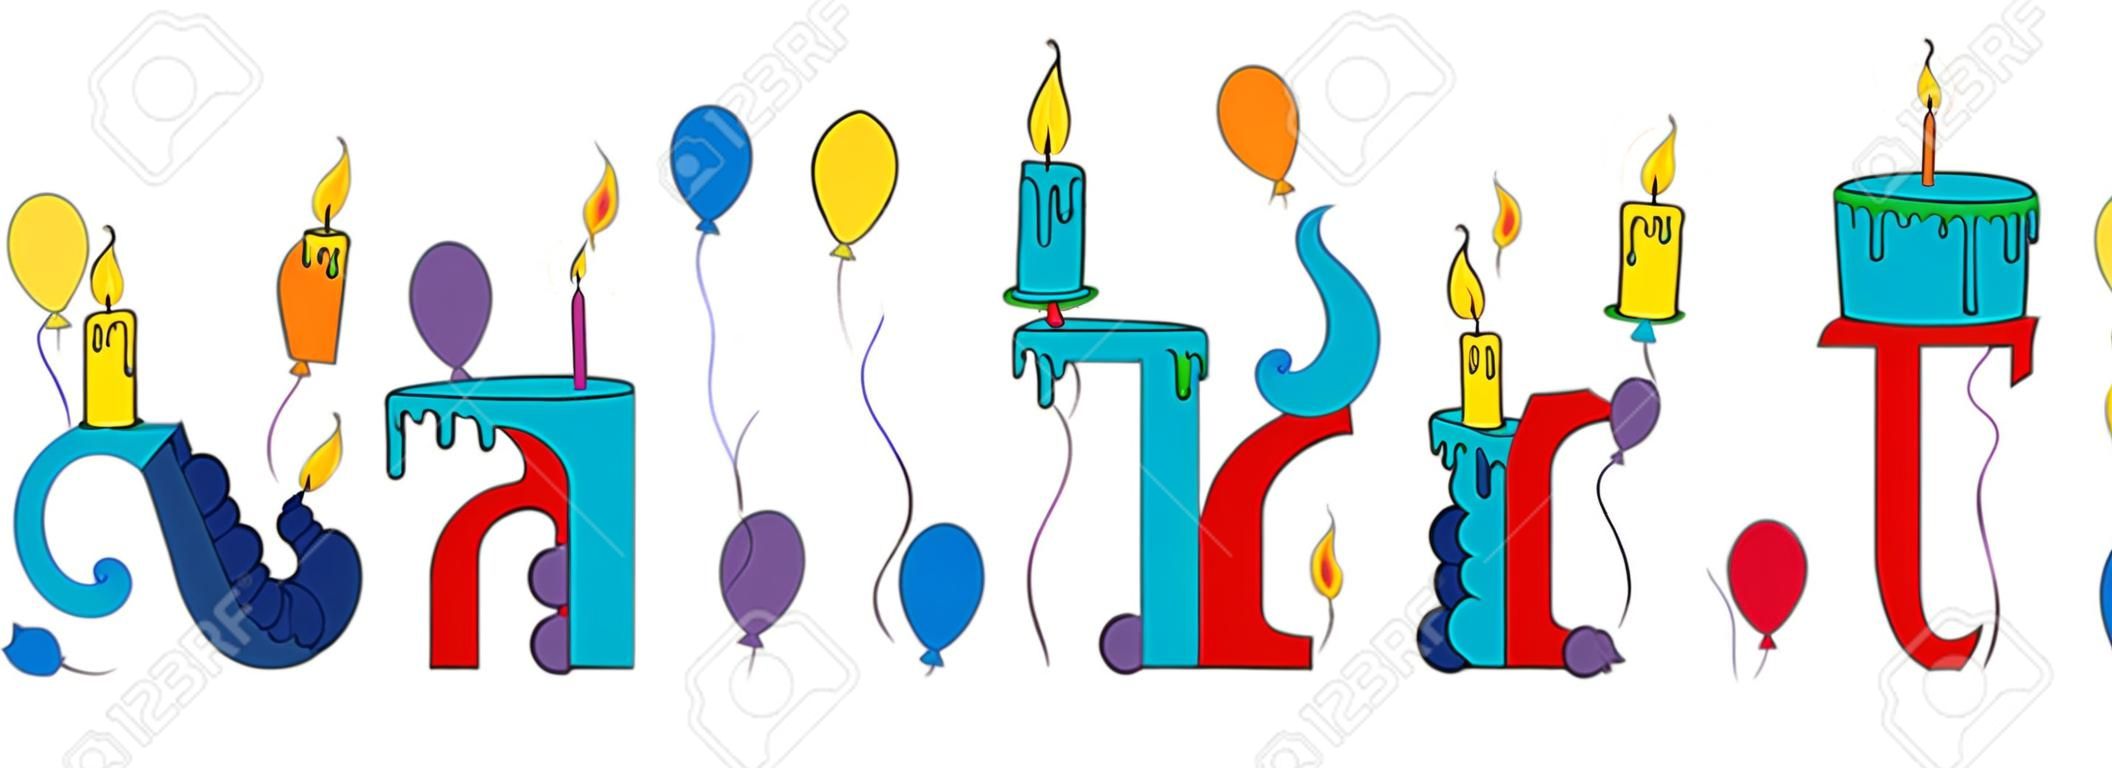 Matias Name mit buntem Geburtstagskuchen der Beschriftung 3d mit Kerzen und Ballonen.